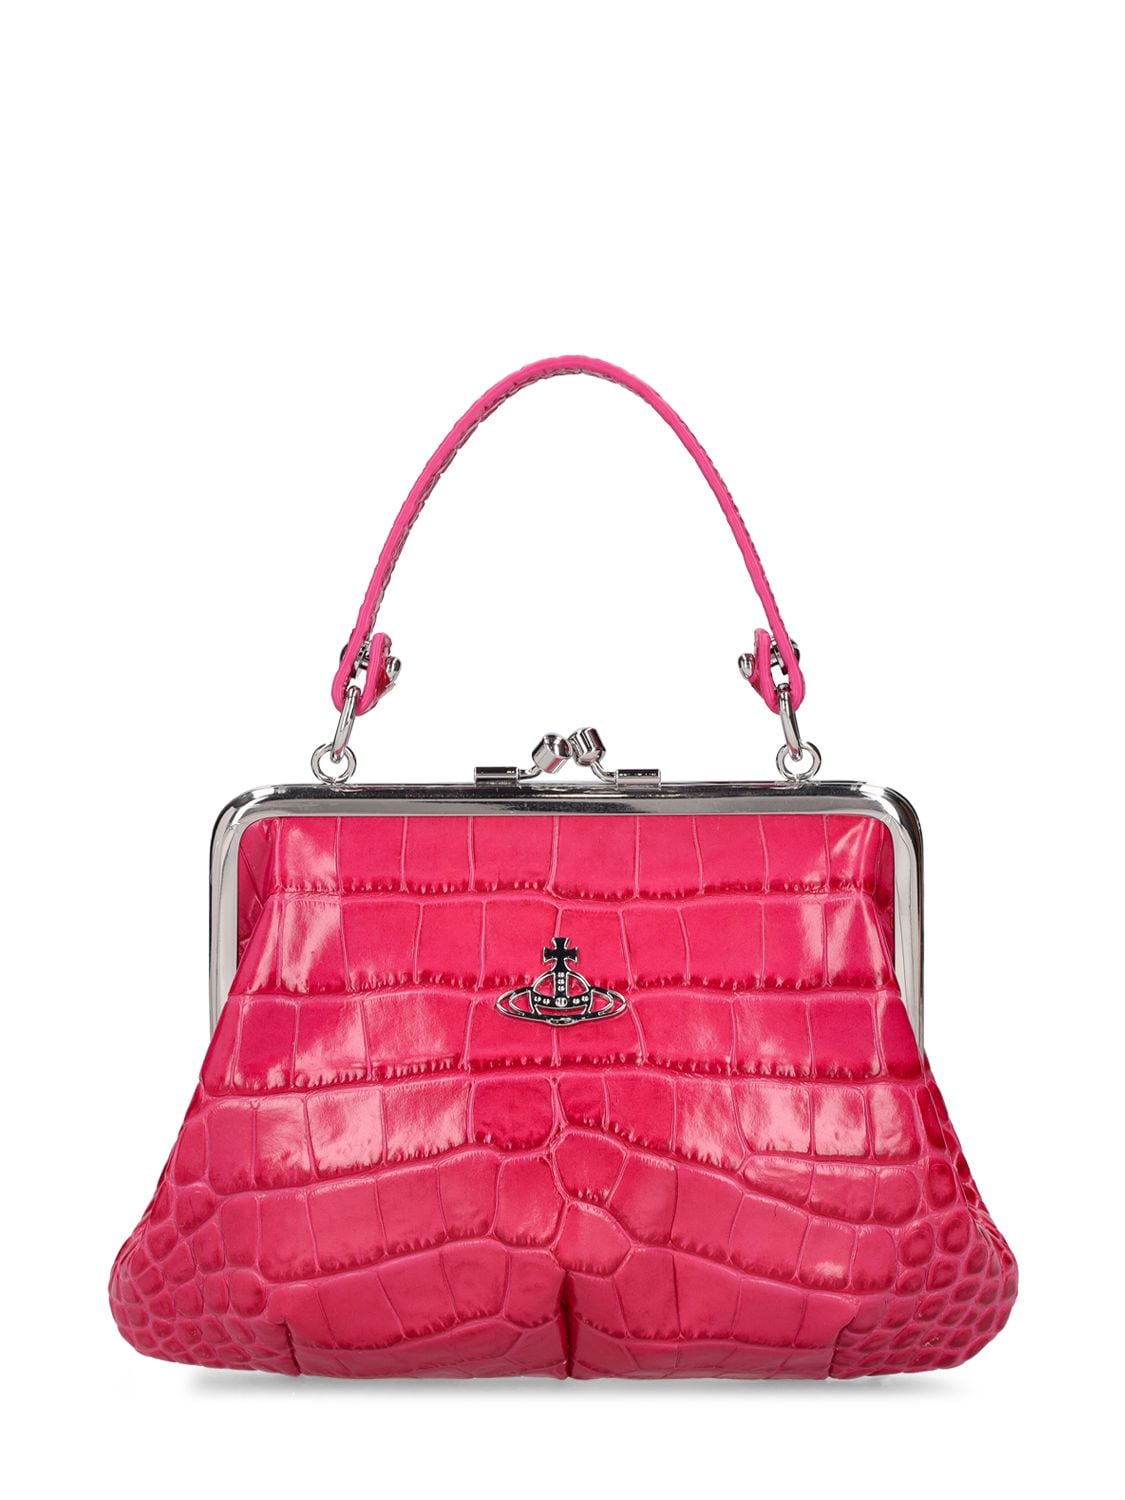 Vivienne Westwood Granny Frame Croc Embossed Leather Bag In Pink